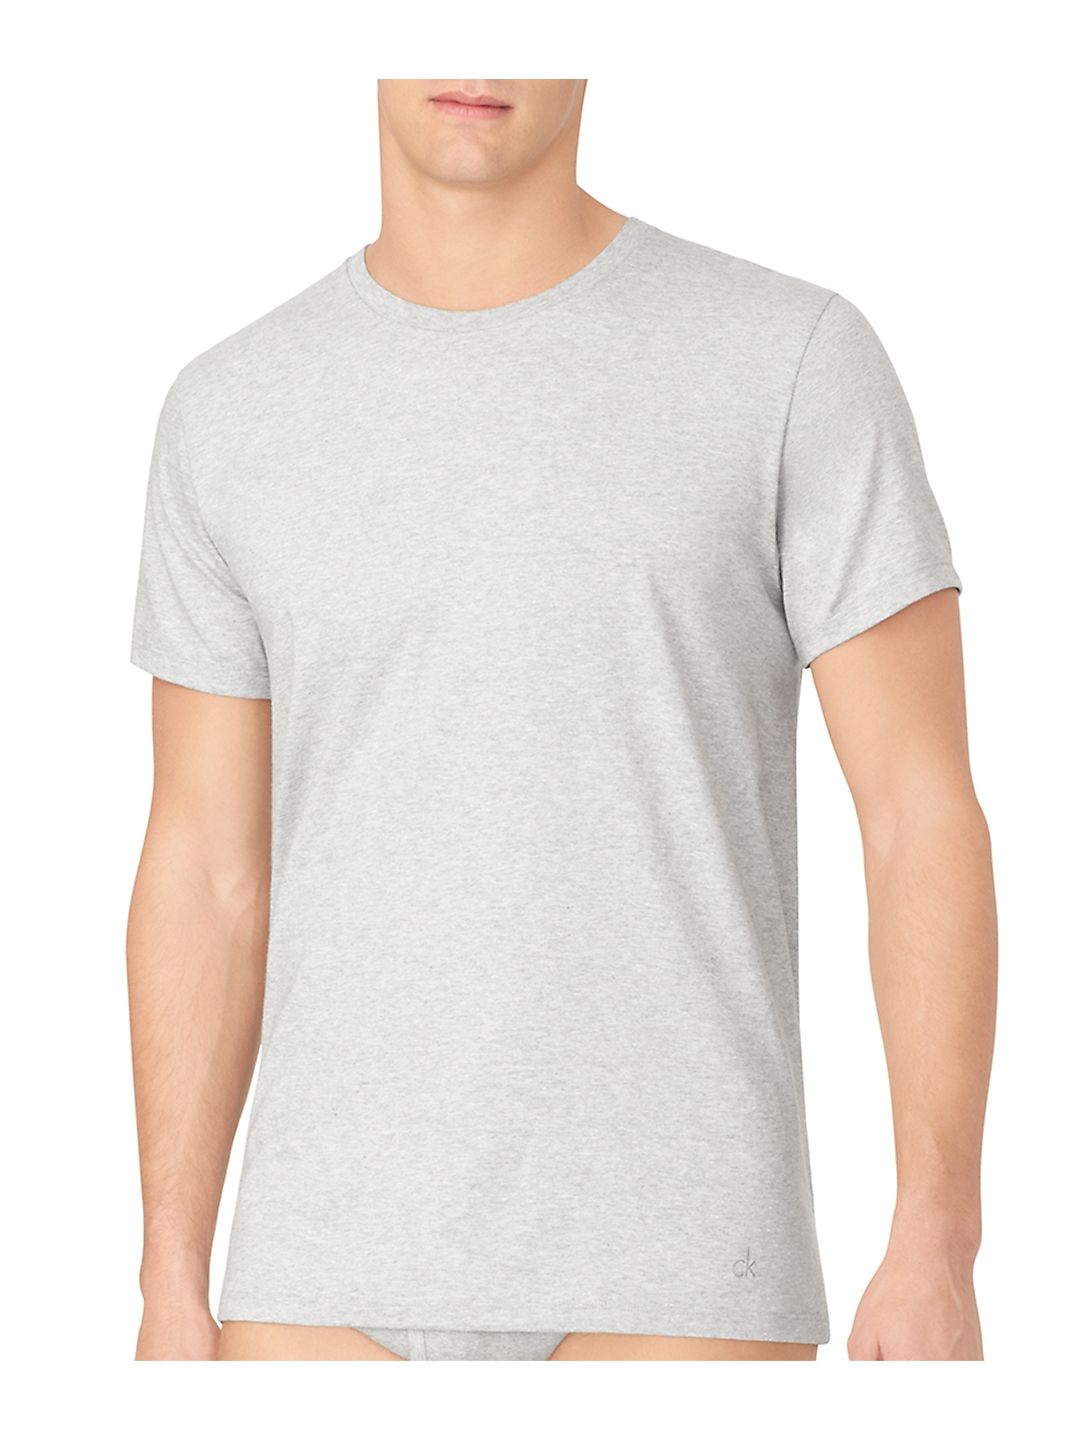 Men's 3-Pack Cotton Classic Short Sleeve Crew Neck T-Shirt - image 1 of 2